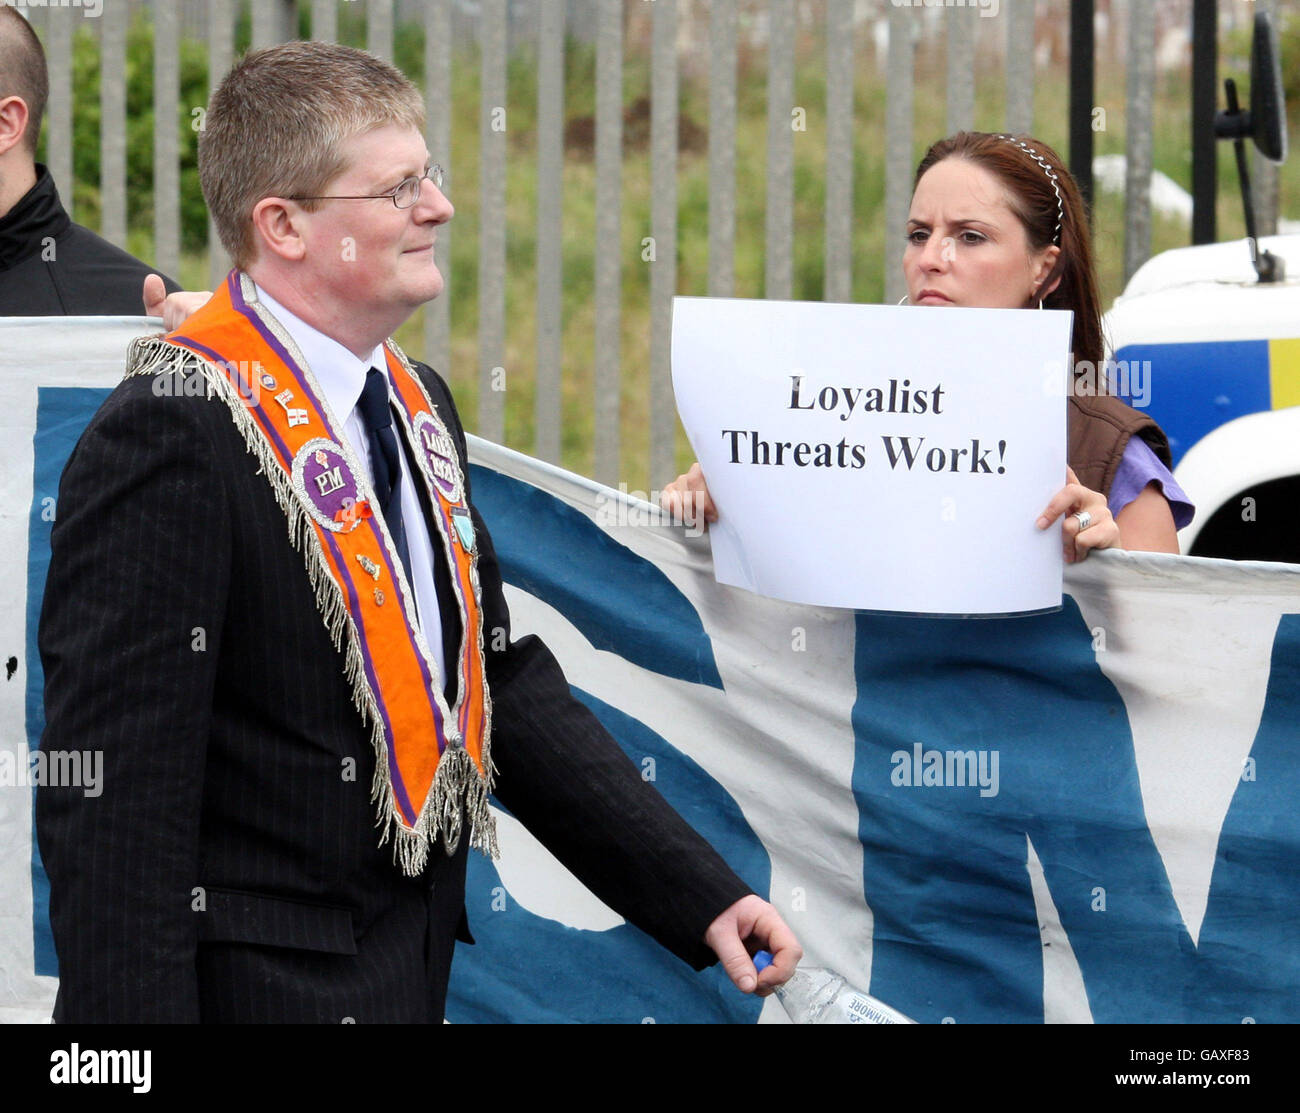 An Orangeman walks past a Nationalist protester on the Spirngfield Road, west Belfast, Northern Ireland. Stock Photo